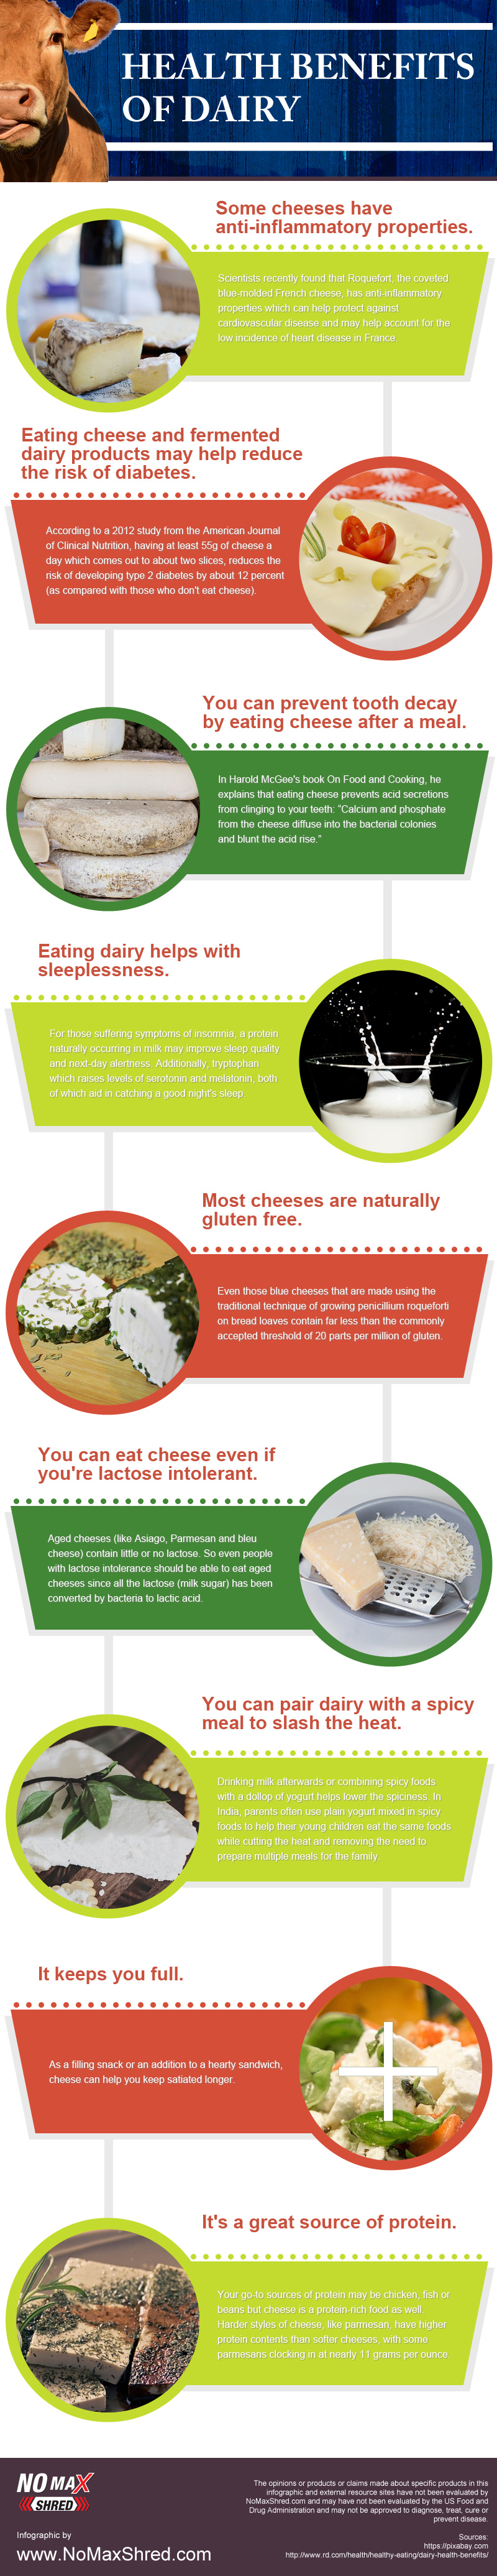 Health Benefits of Dairy